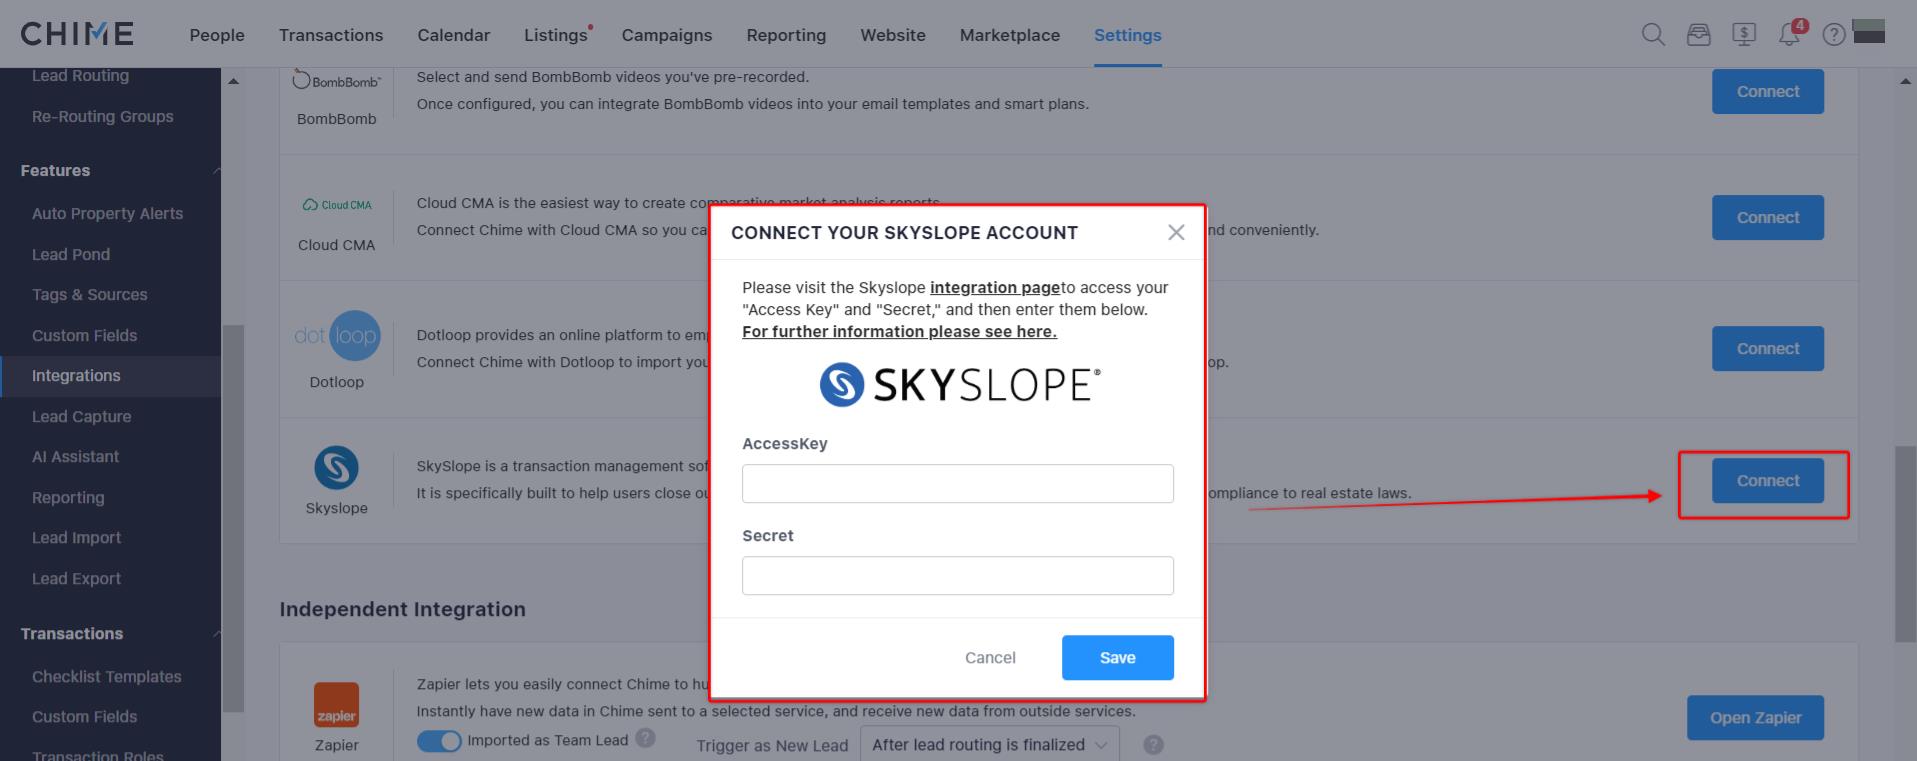 skyslope_integration_setting.jpeg